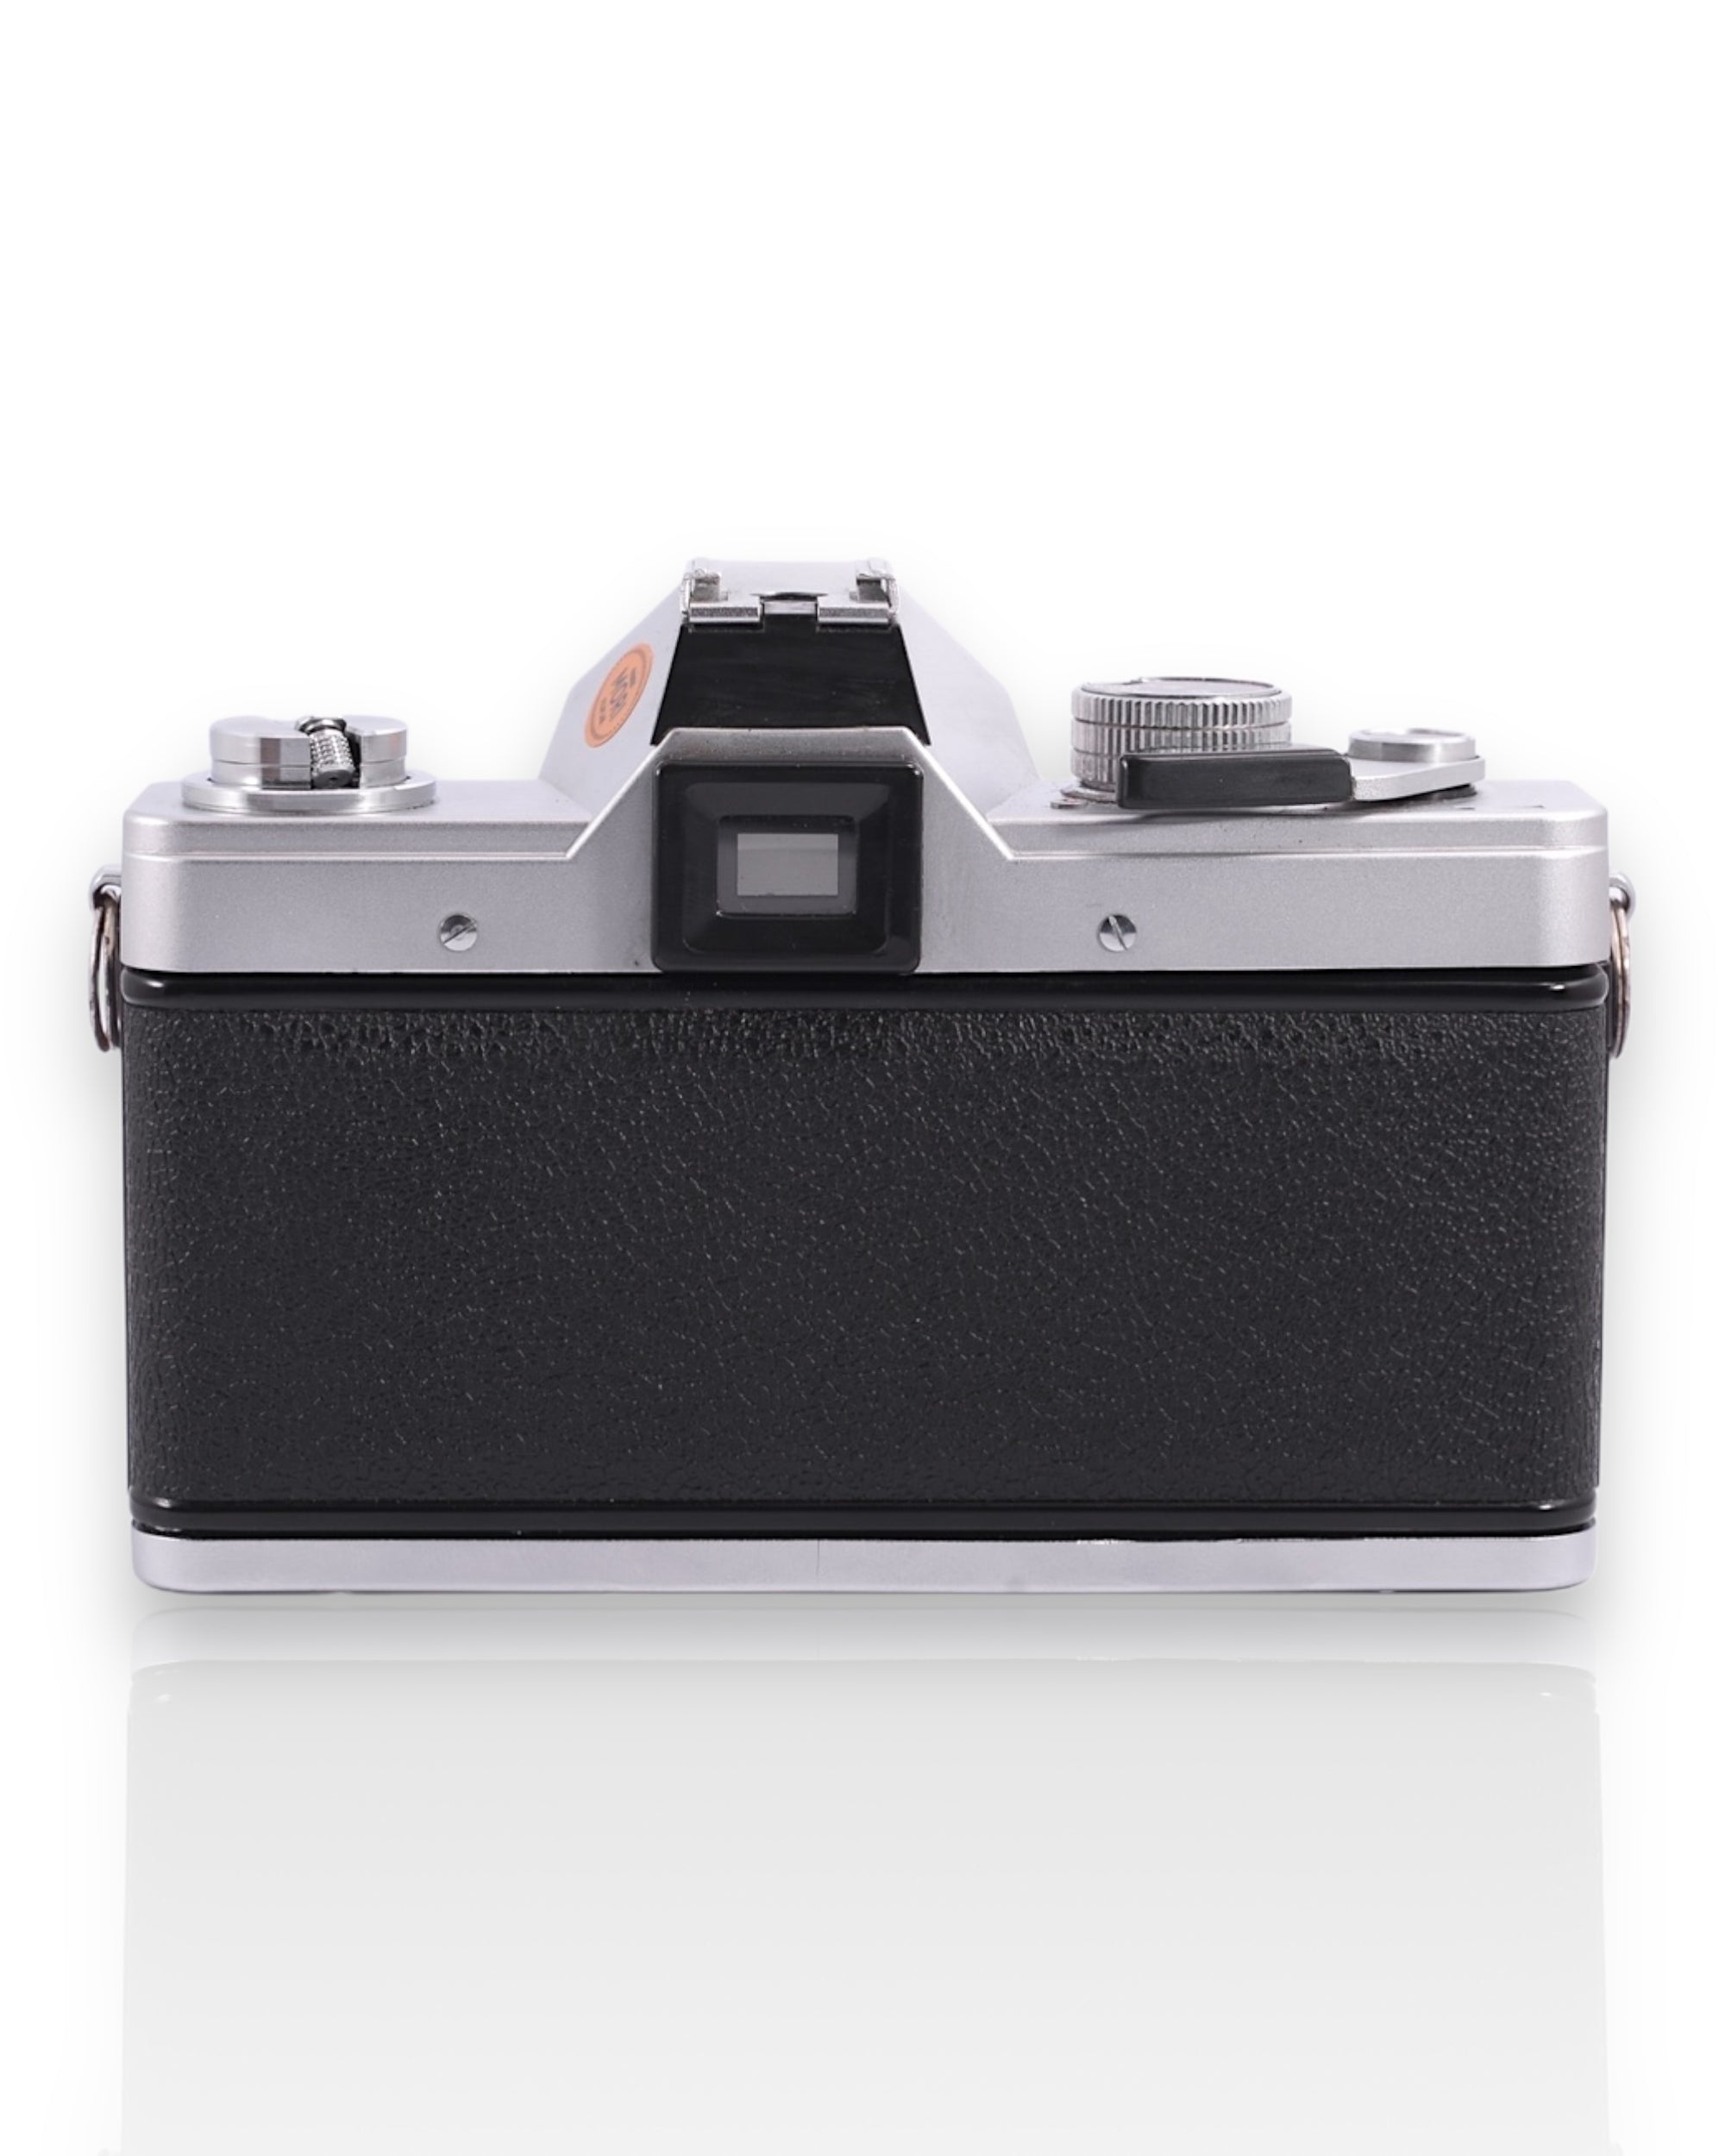 Praktica LTL 3 35mm SLR Film Camera with 50mm f2.8 Lens